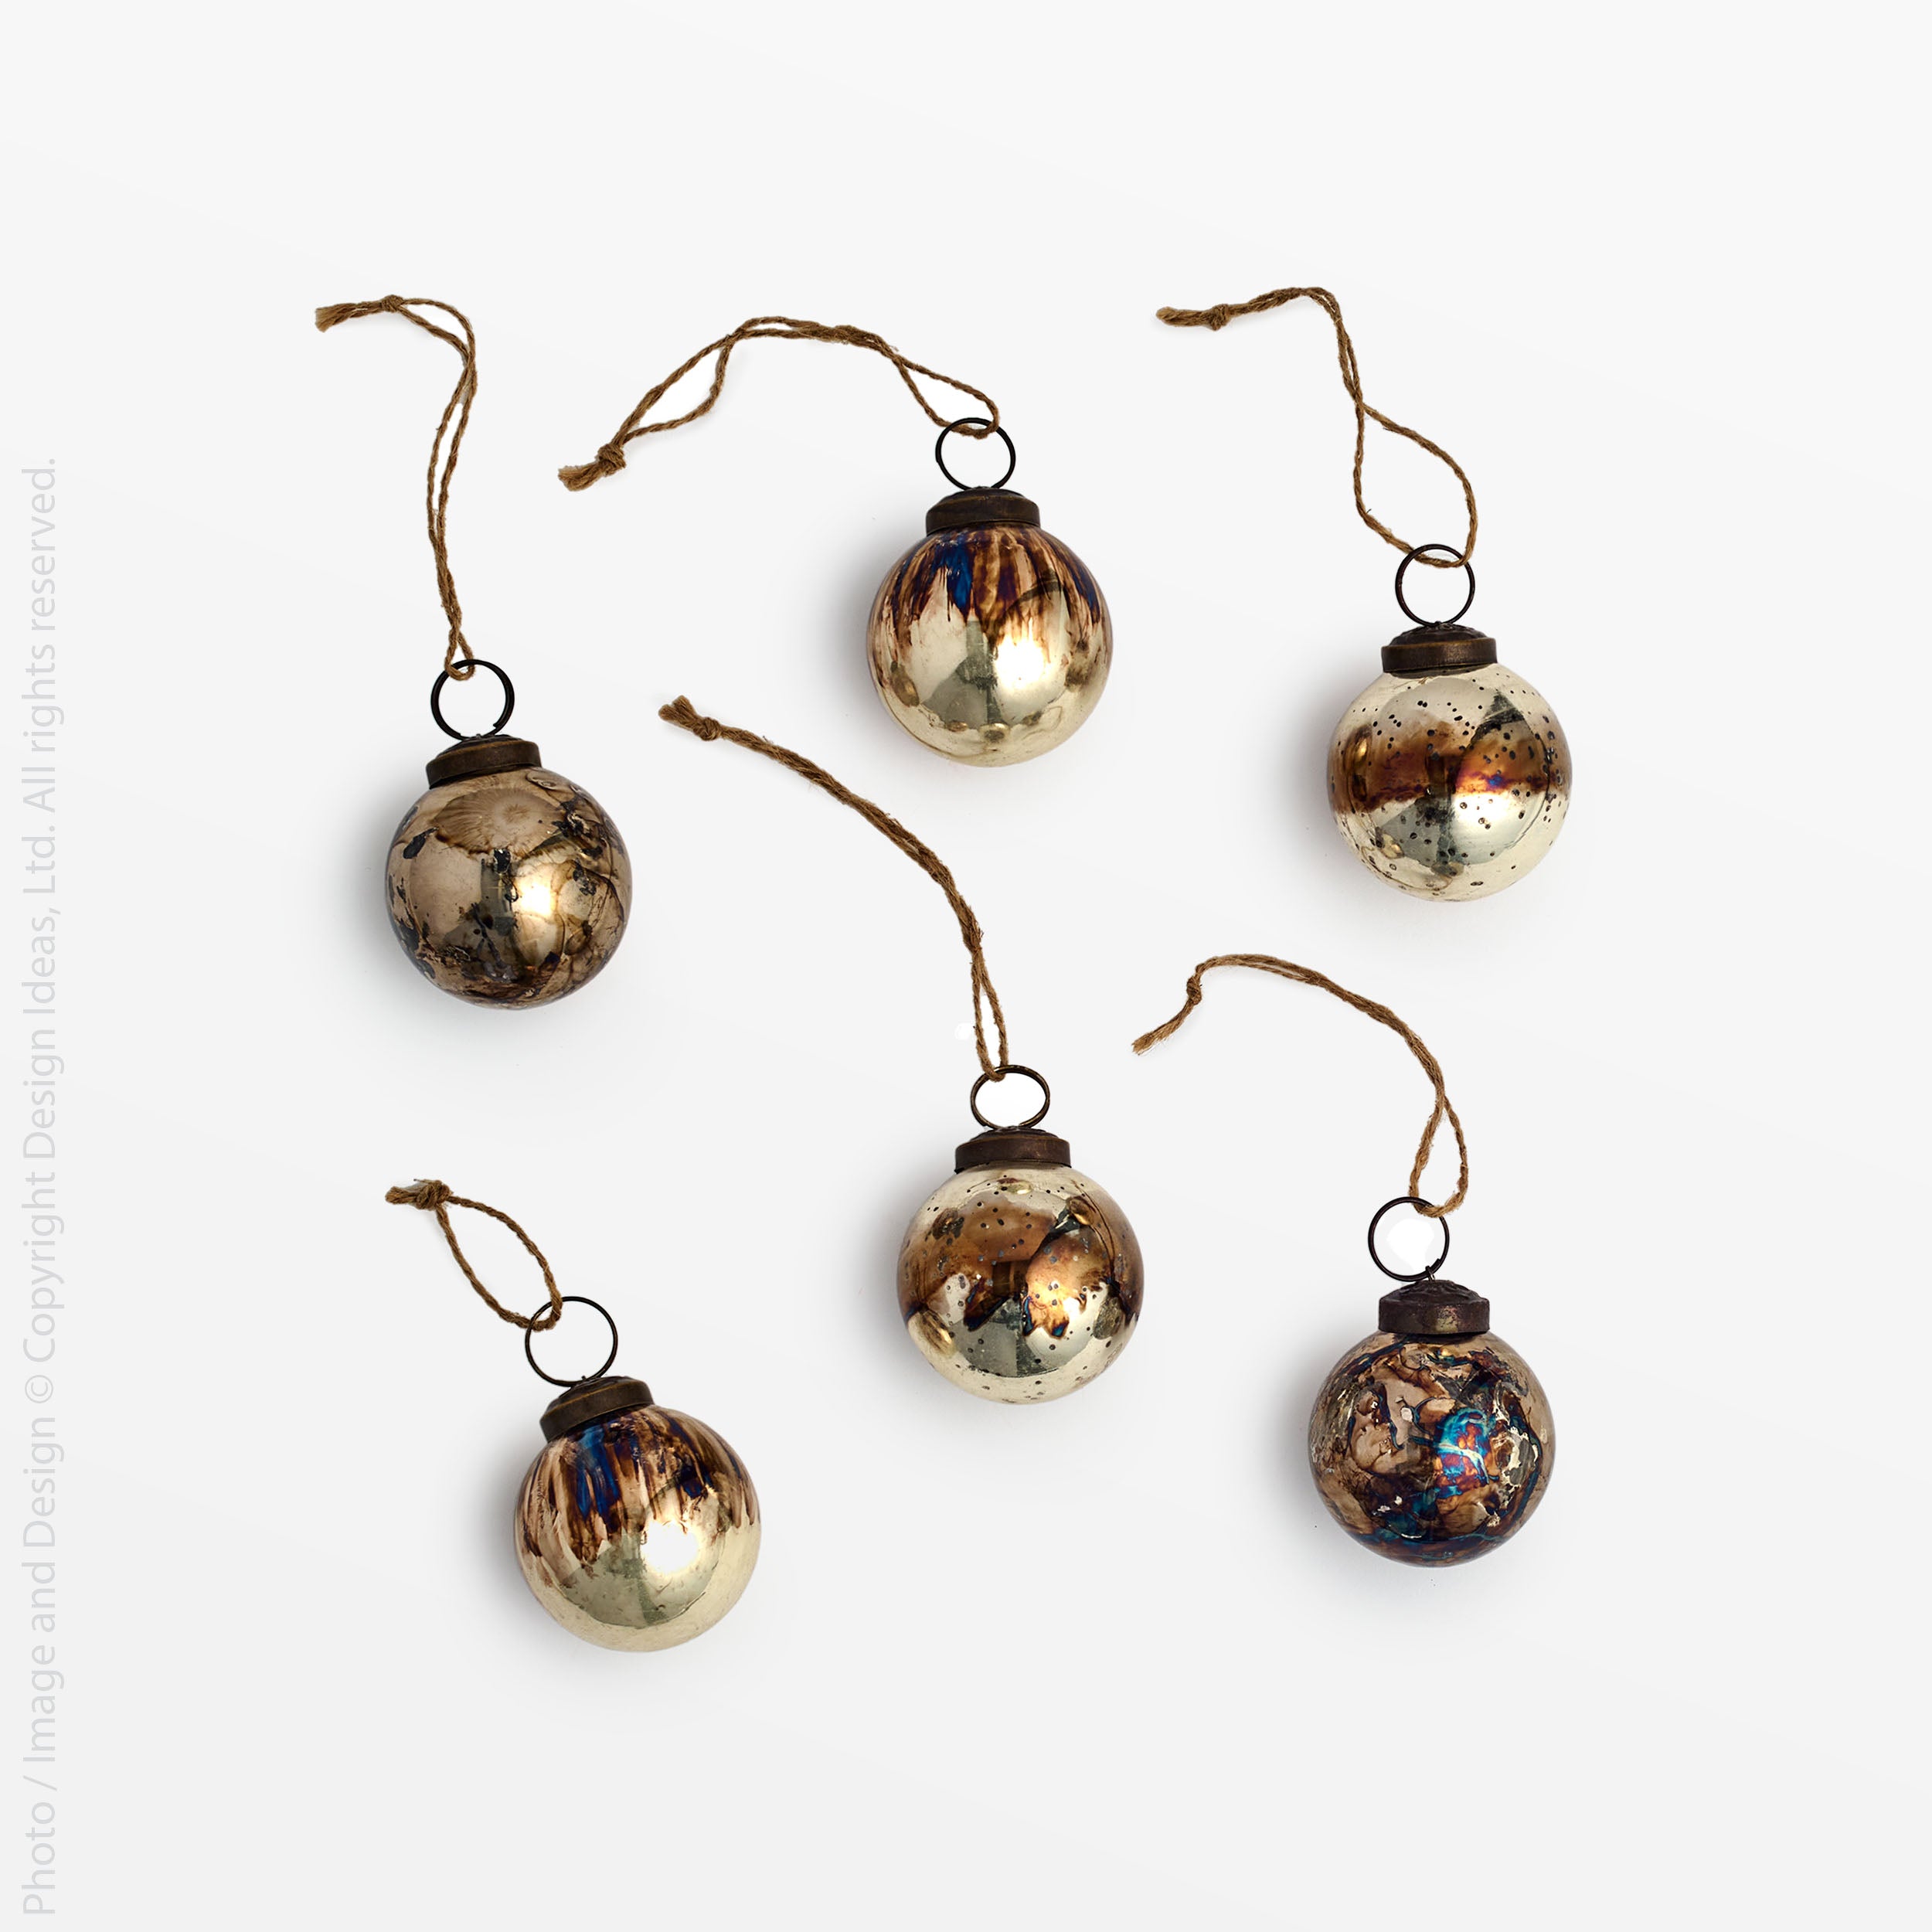 Chamonix™ Mouth Blown Glass Ornaments - 2 inch (set of 6)